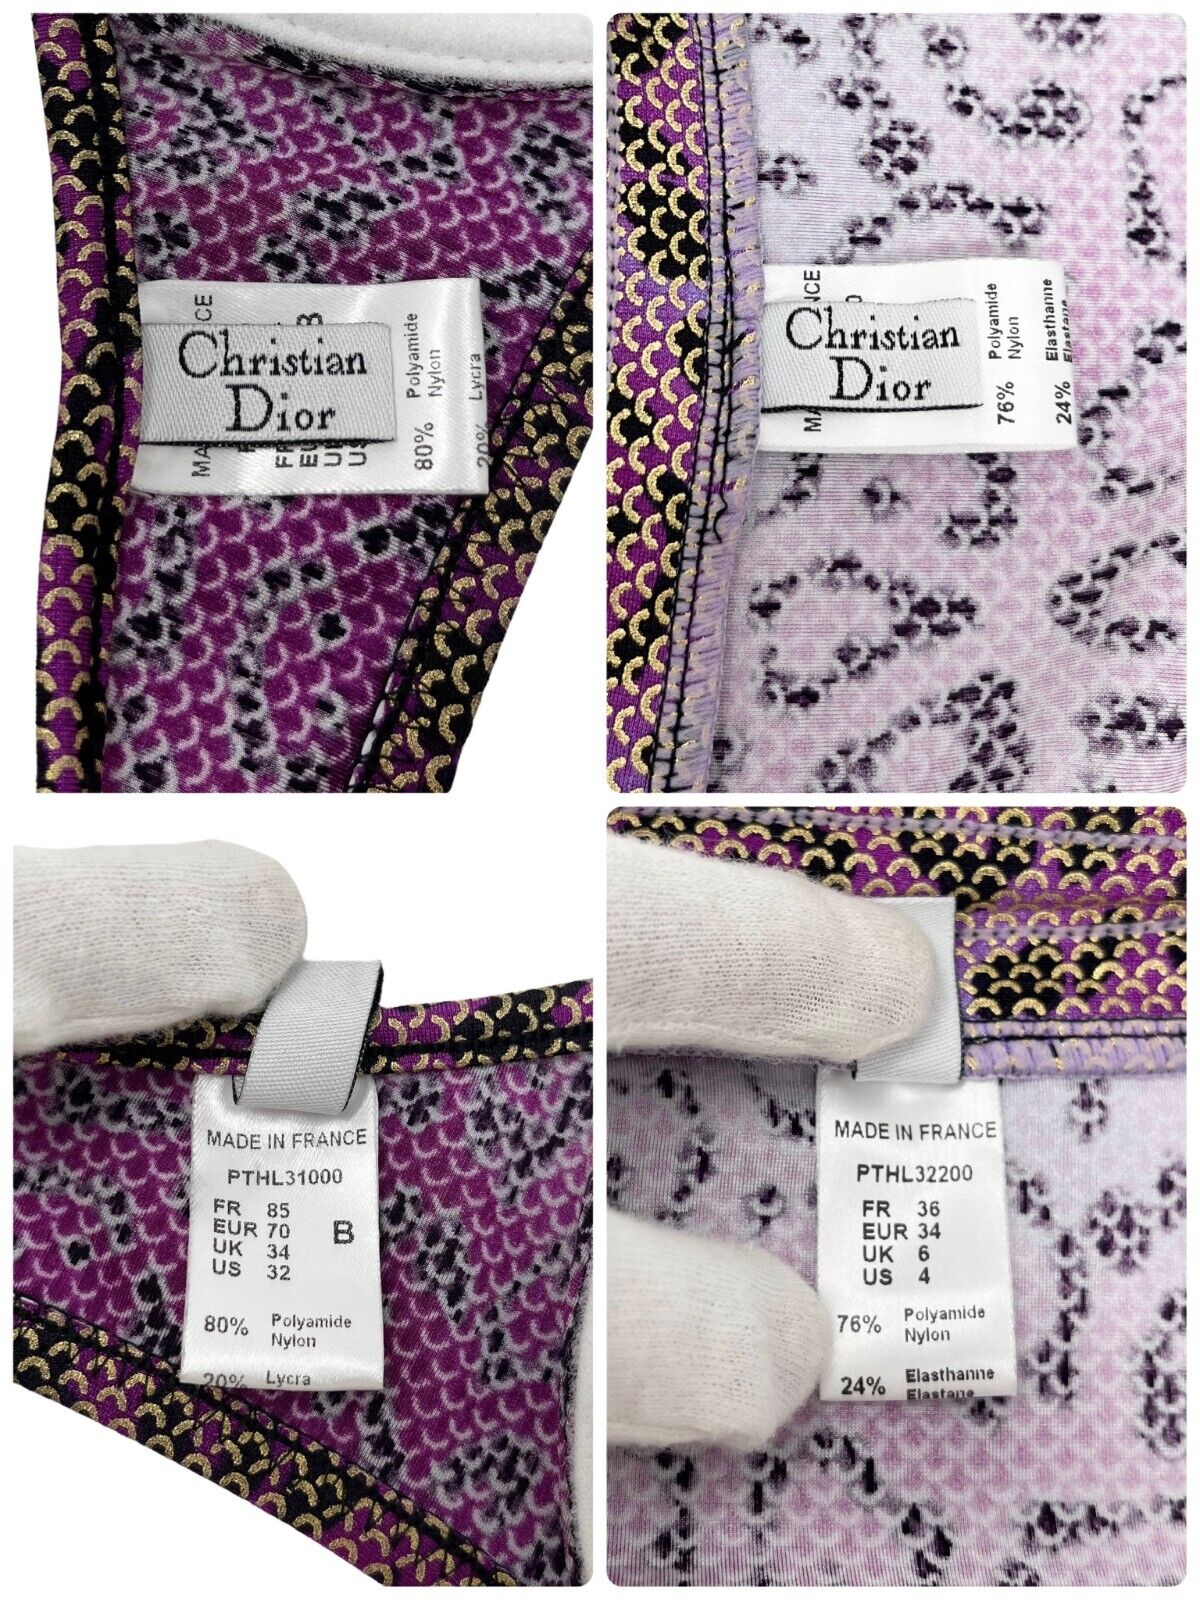 Christian Dior Vintage Swimwear Swimsuit Bikini #36 Animal Print Purple RankAB+